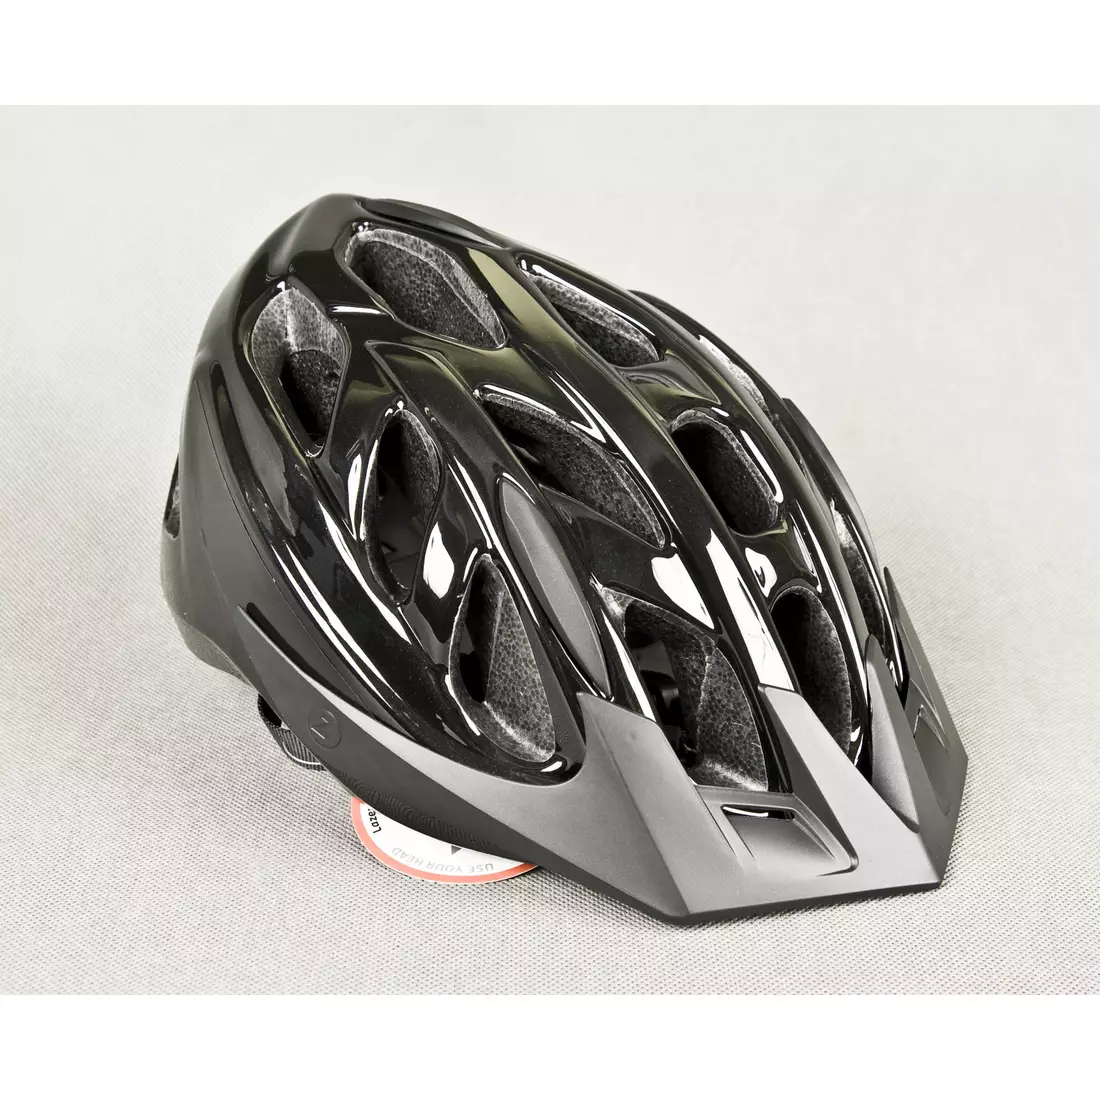 LAZER - CYCLONE MTB bicycle helmet, color: black glossy